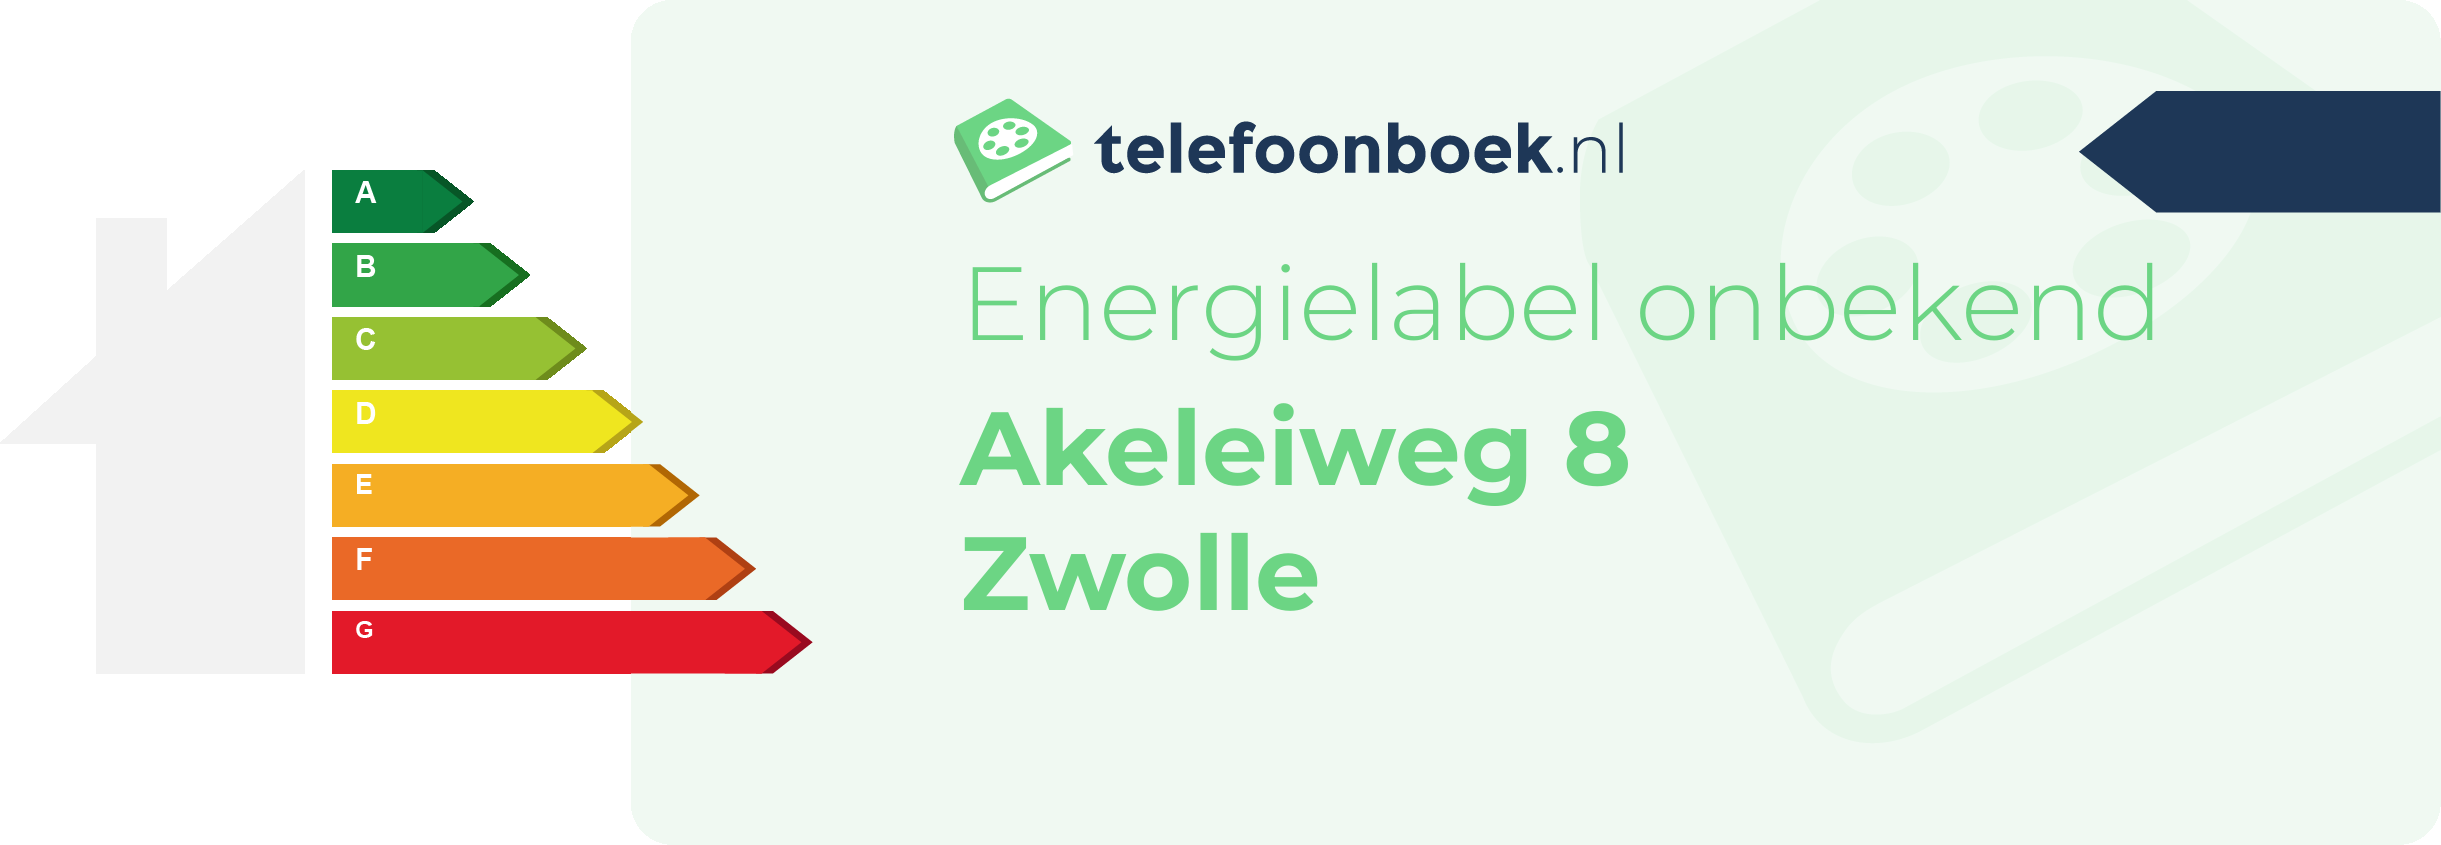 Energielabel Akeleiweg 8 Zwolle